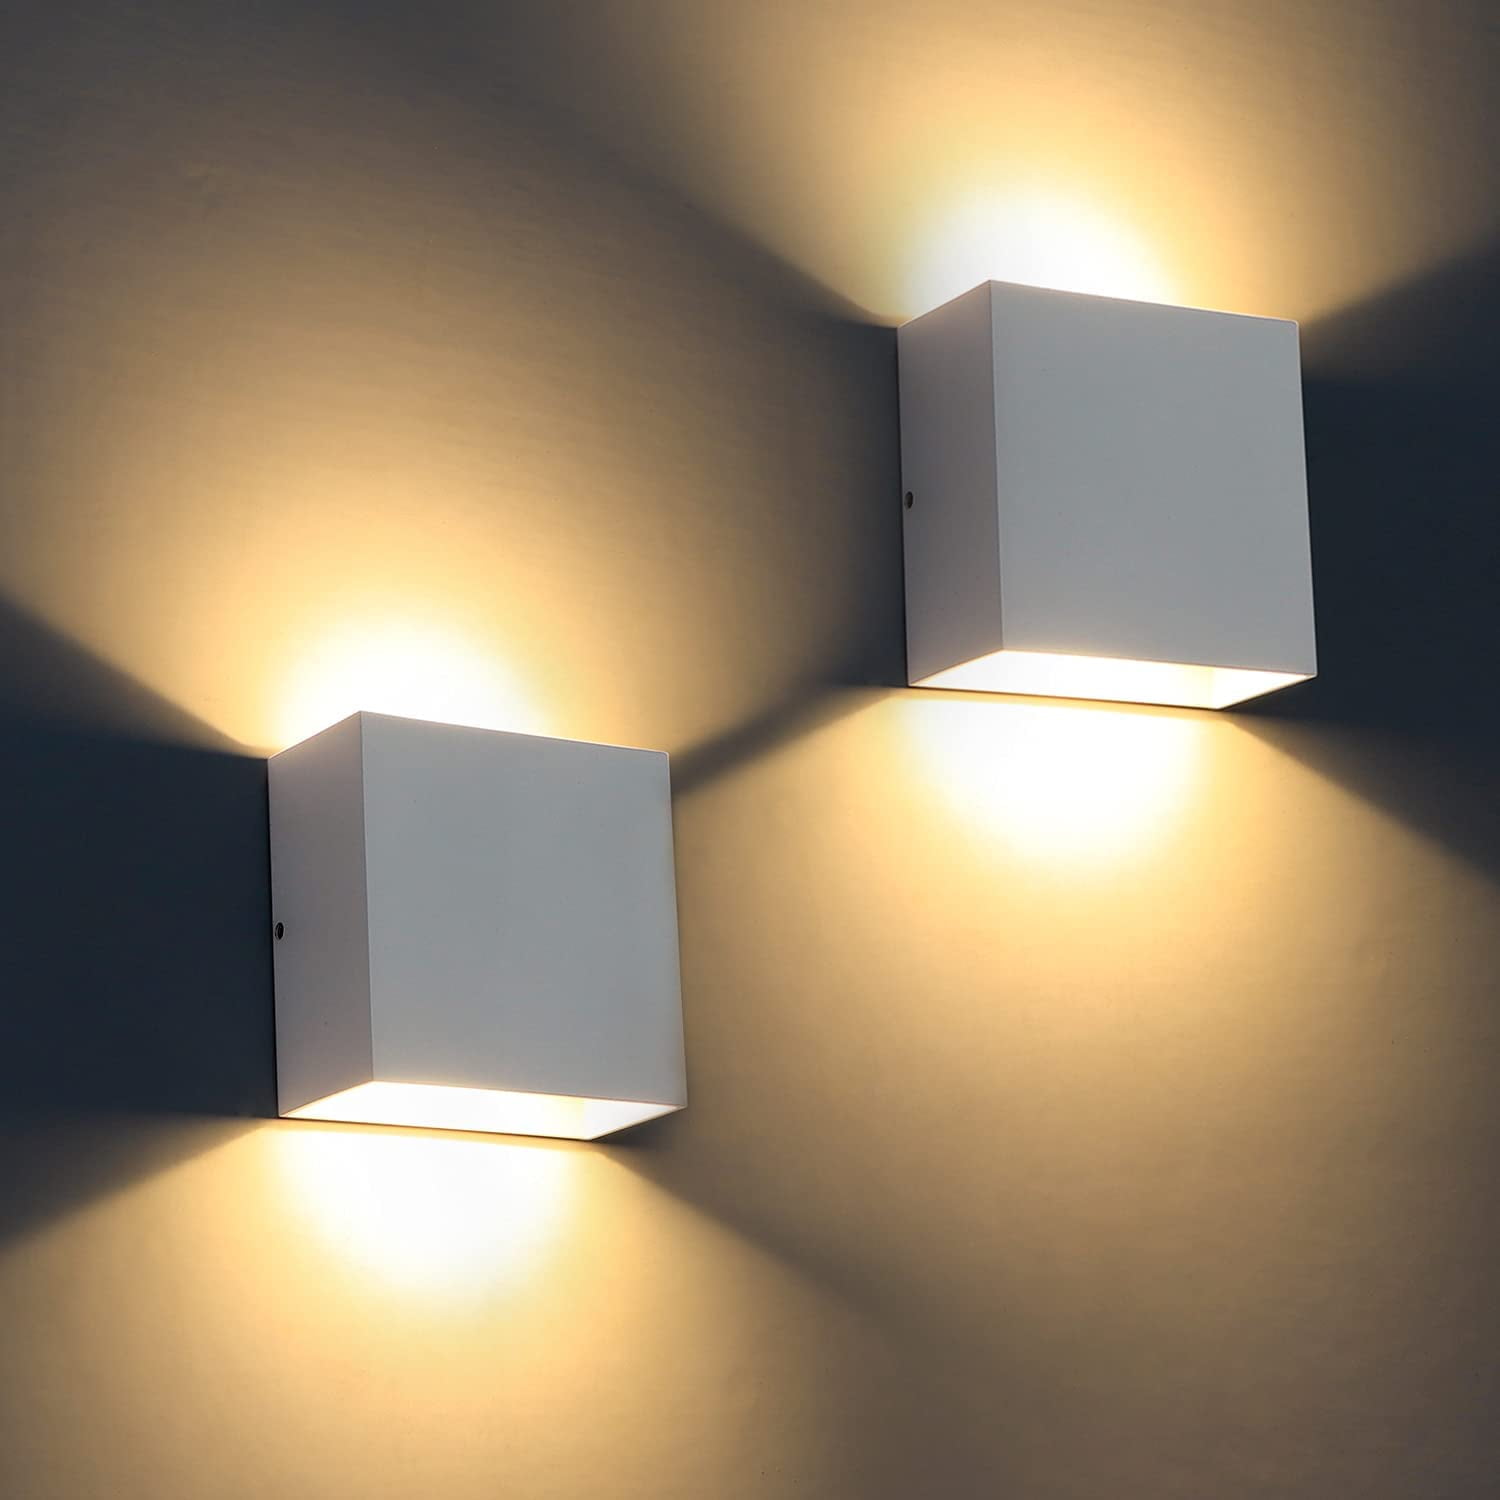 2Pcs 6W Modern LED COB Wall Light Up Down Cube Sconce Lamp Fixtures Spotlighting 